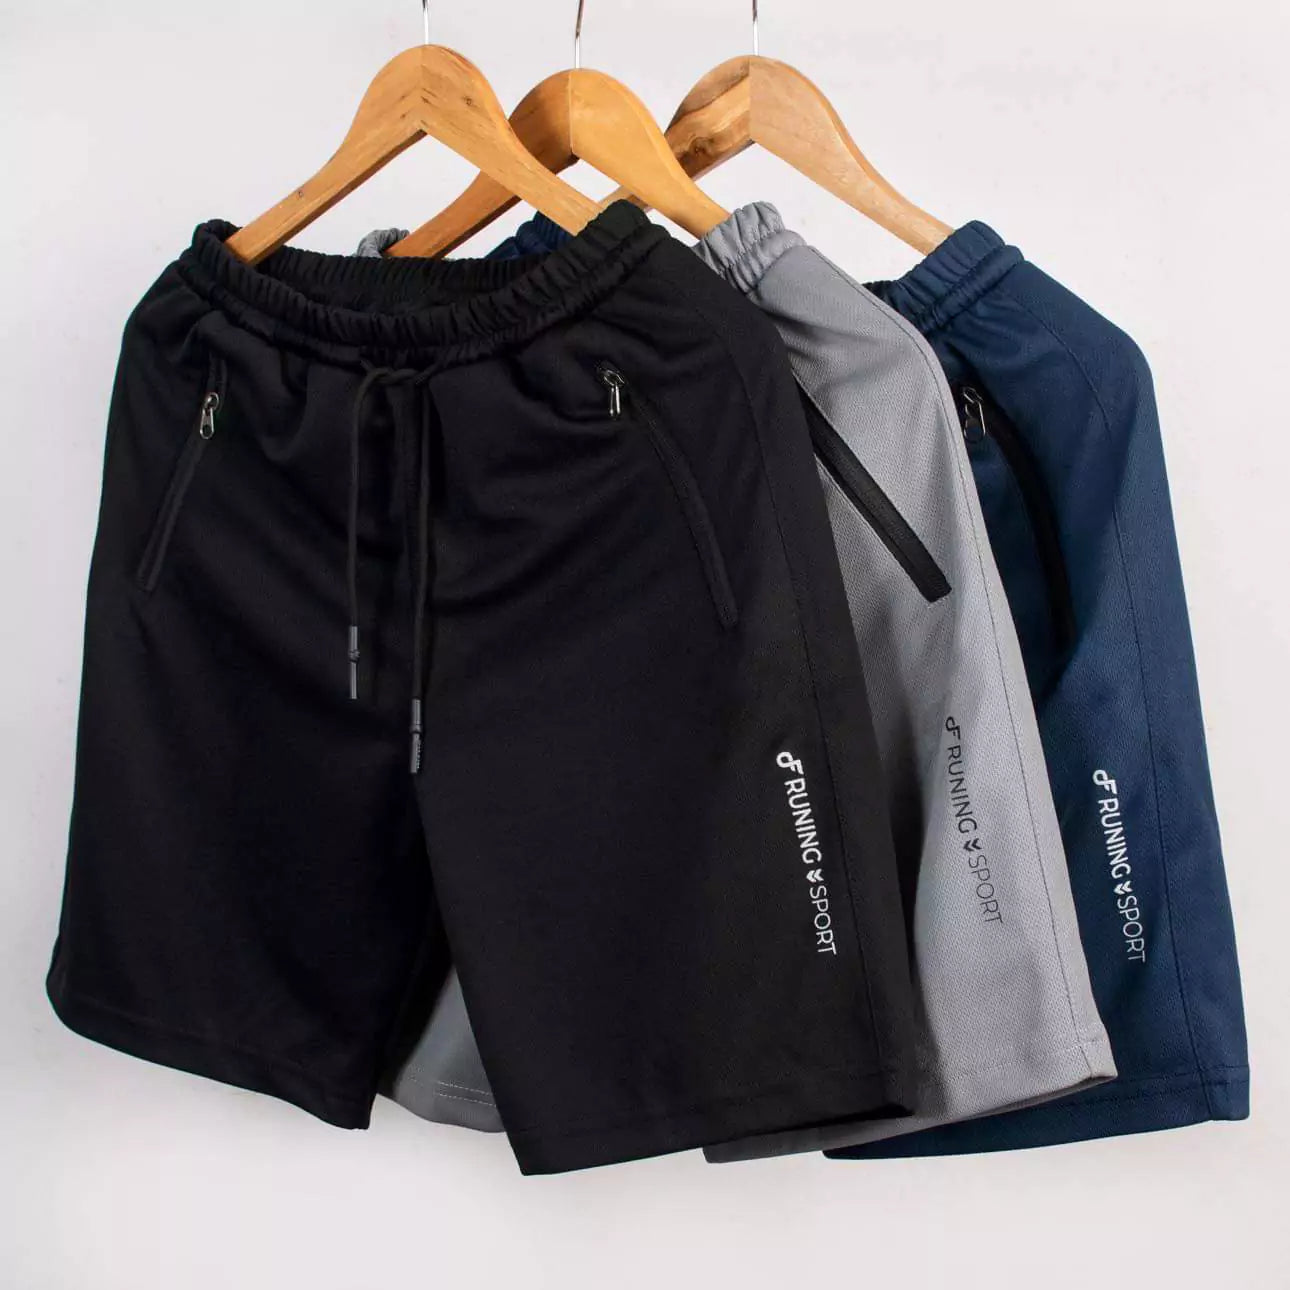 Pack Of 3 Deefuel Mid-Rise Running Short Pants